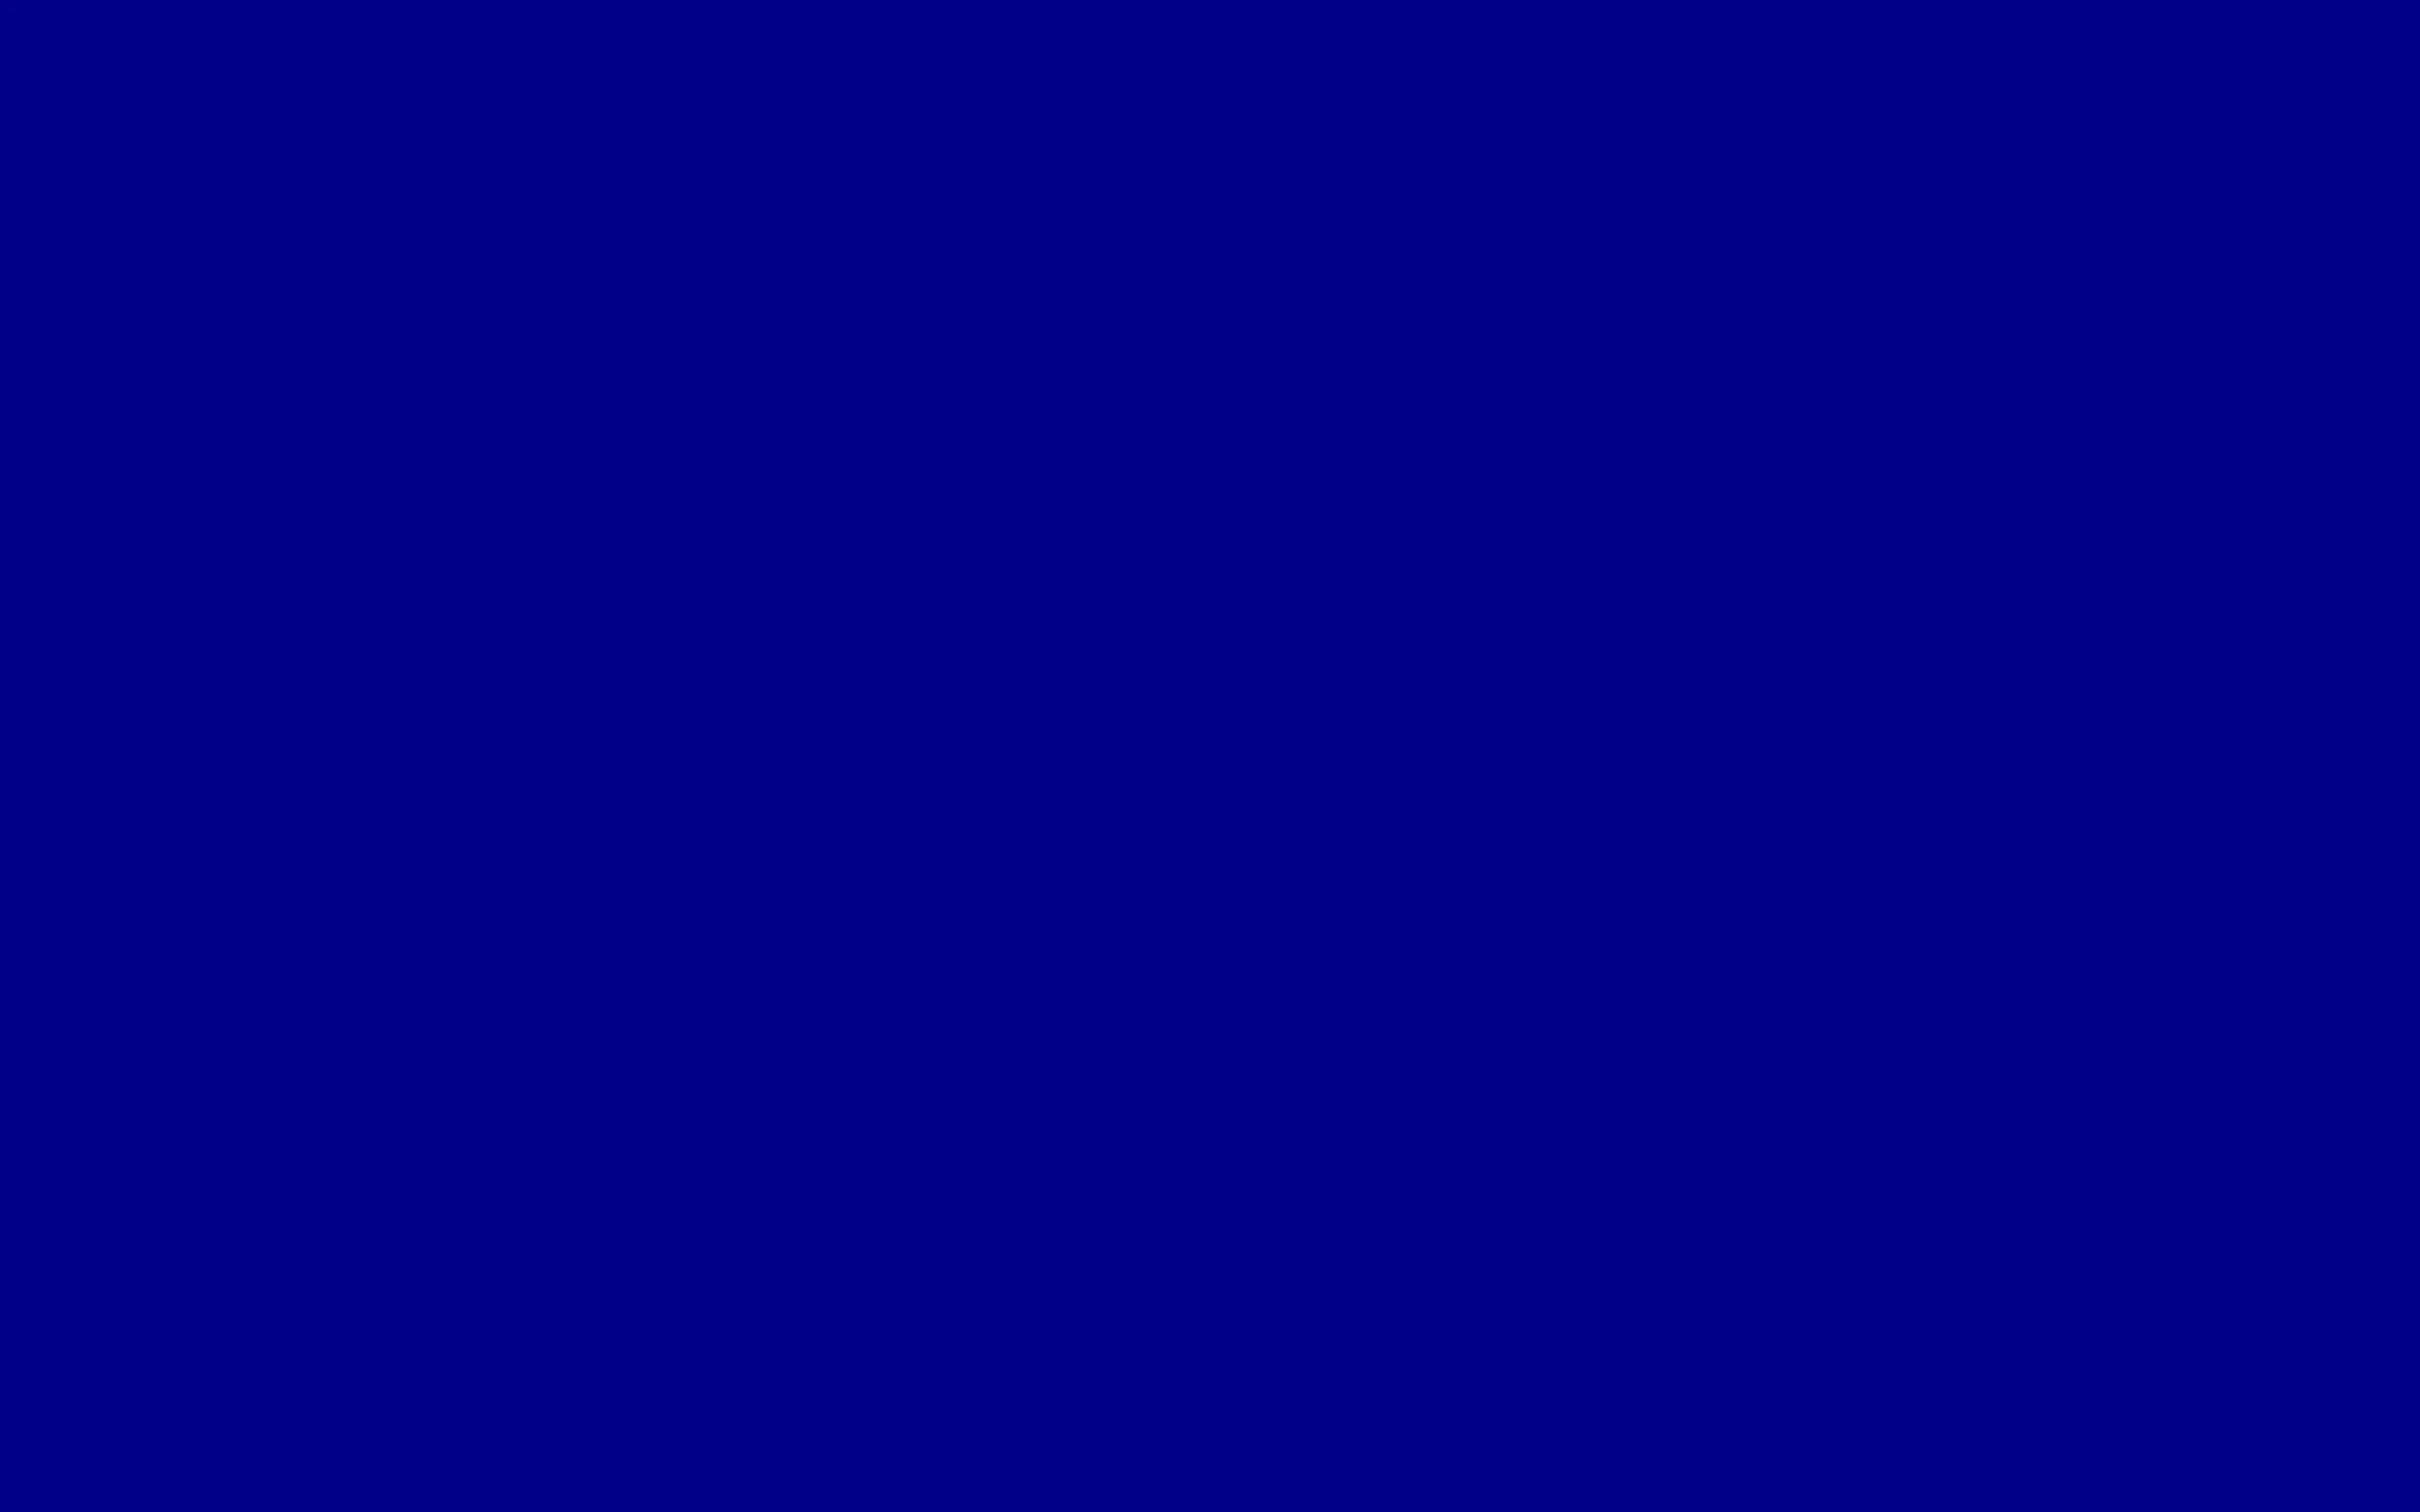 Темно синий цвет фон. Образец цвета синий. 7fffd4 цвет. Цвет 205. Tt true persistent id